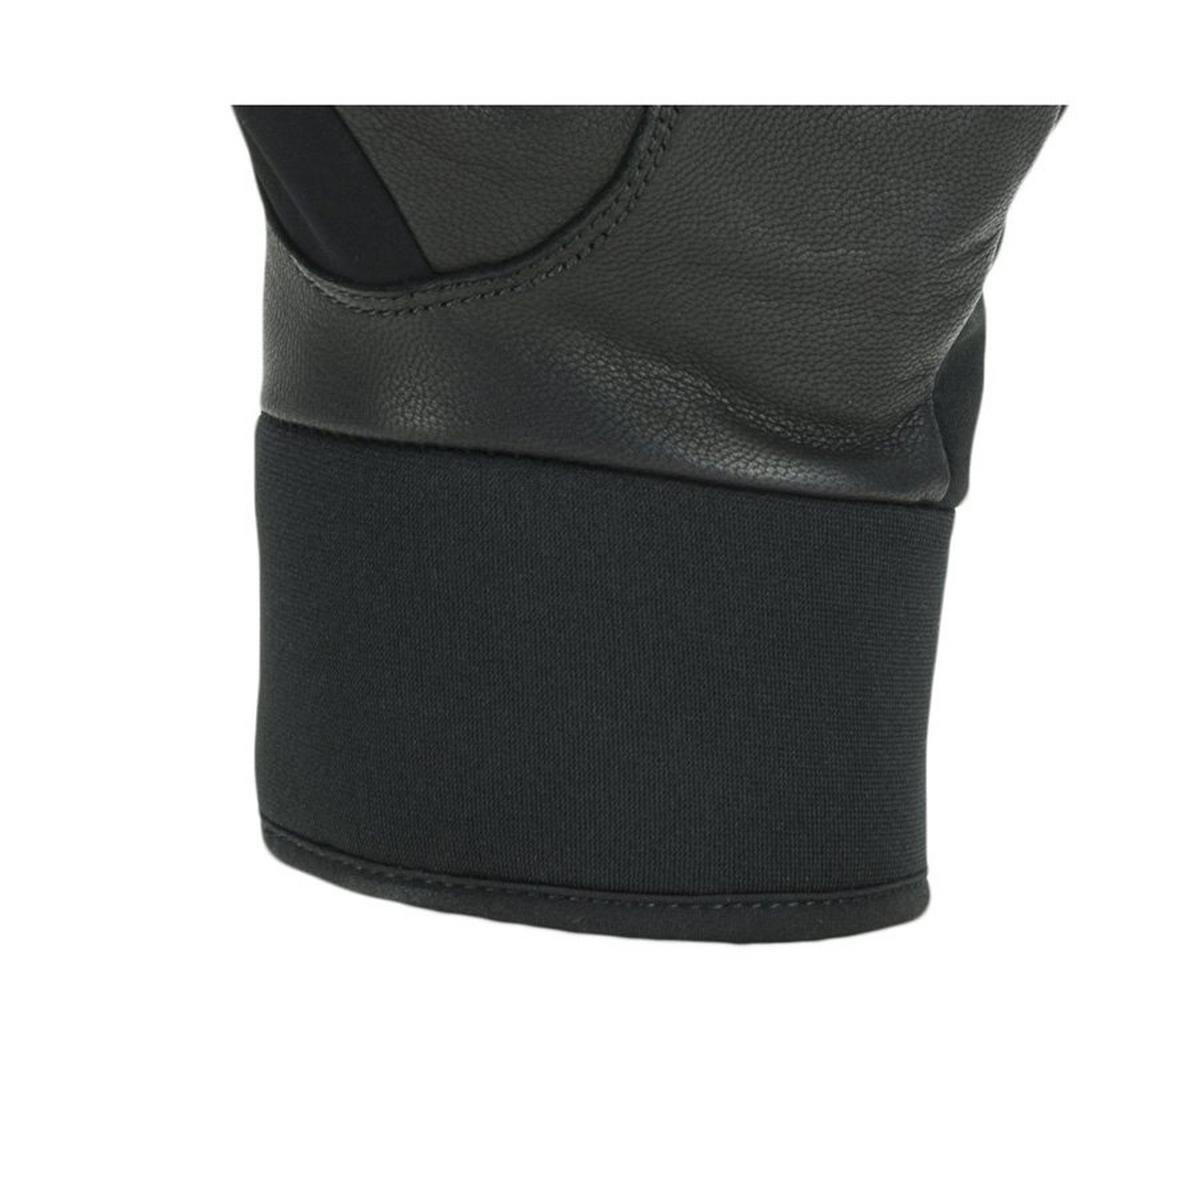 Sealskinz Women's Waterproof All Weather Insulated Glove - Black